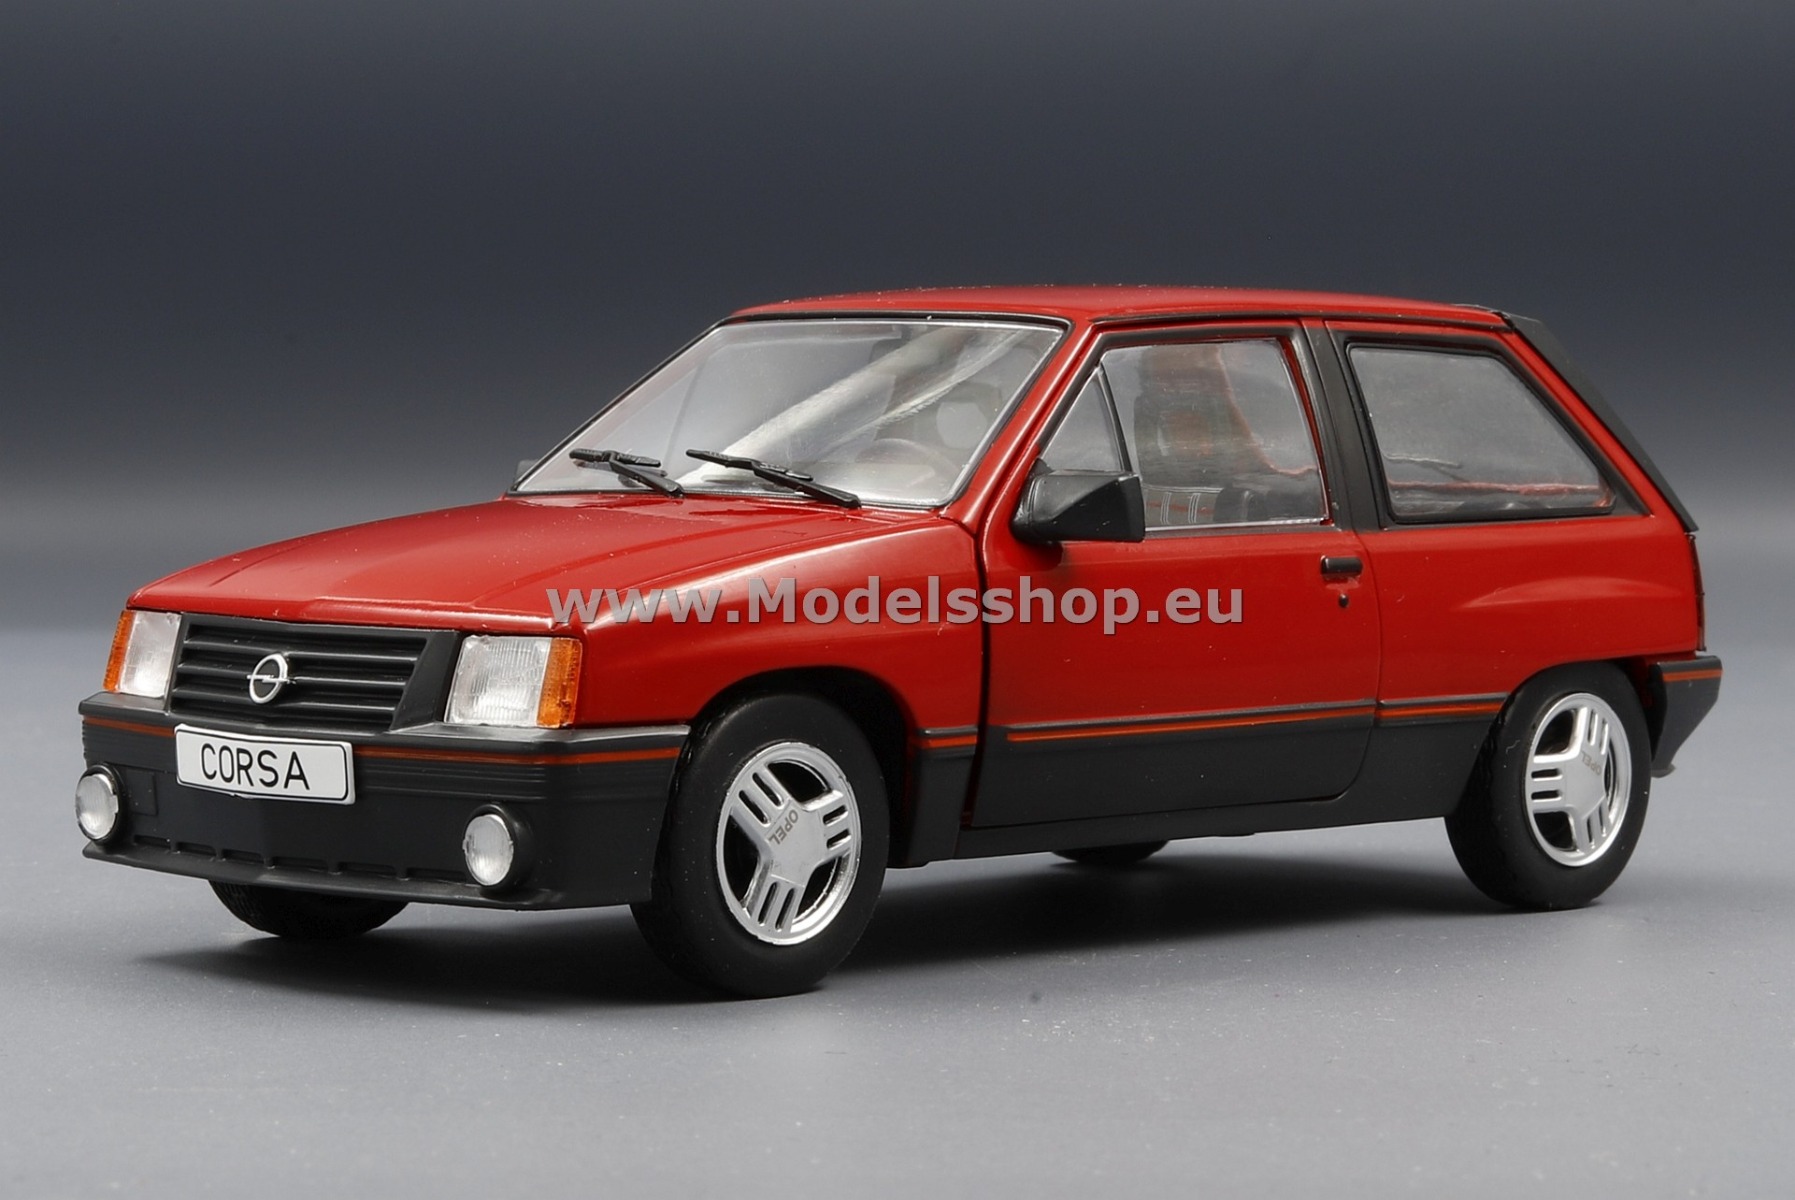 Opel Corsa A SR 1985 /red/